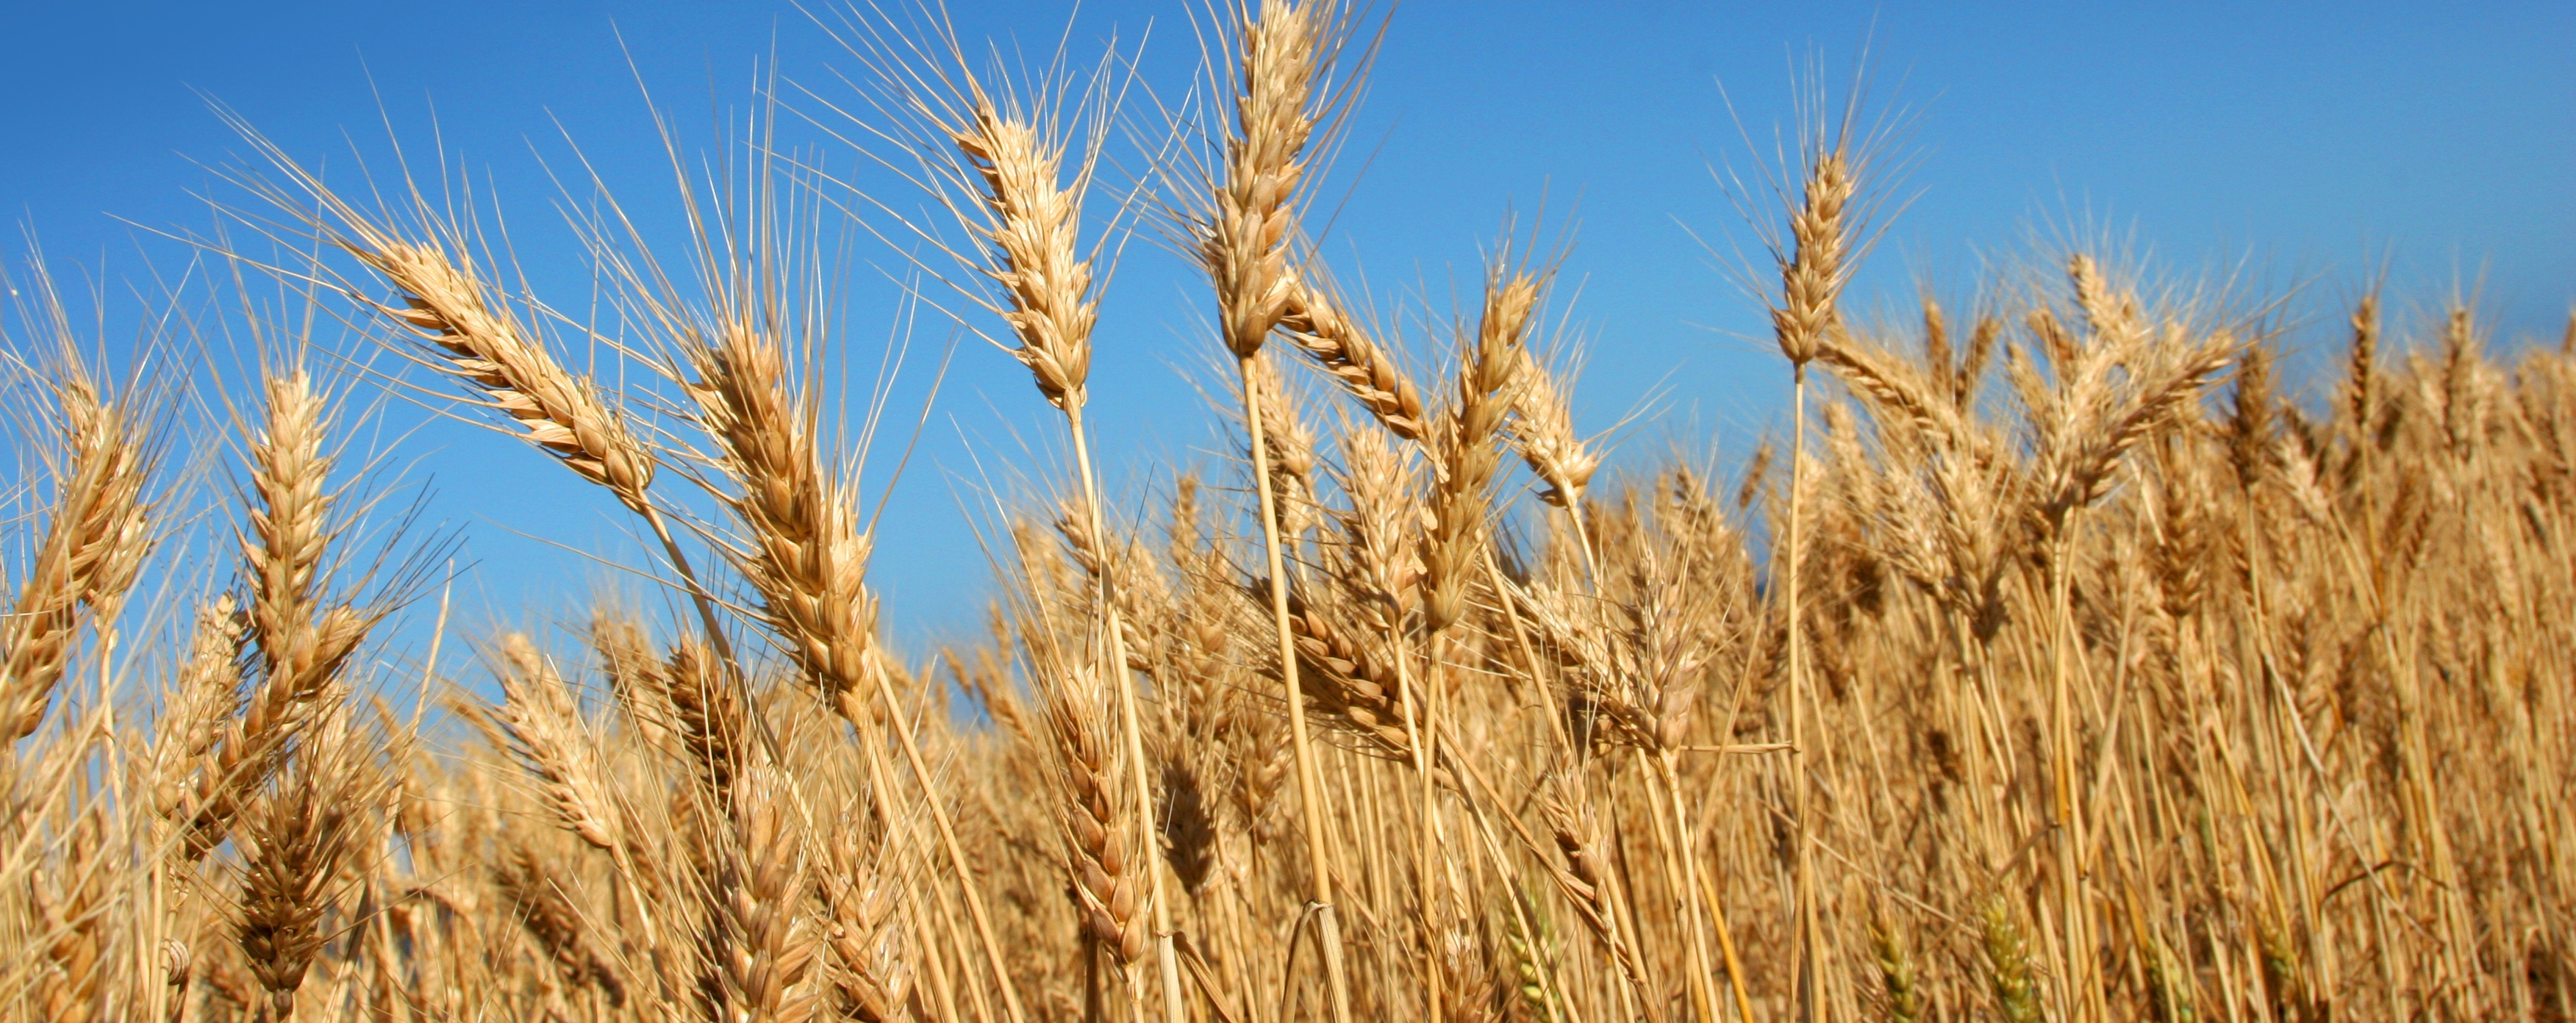 Пшеница группа организмов. Пшеница дурум. Пшеница Кыргызстан. Сладкая пшеница. Wheat группа.